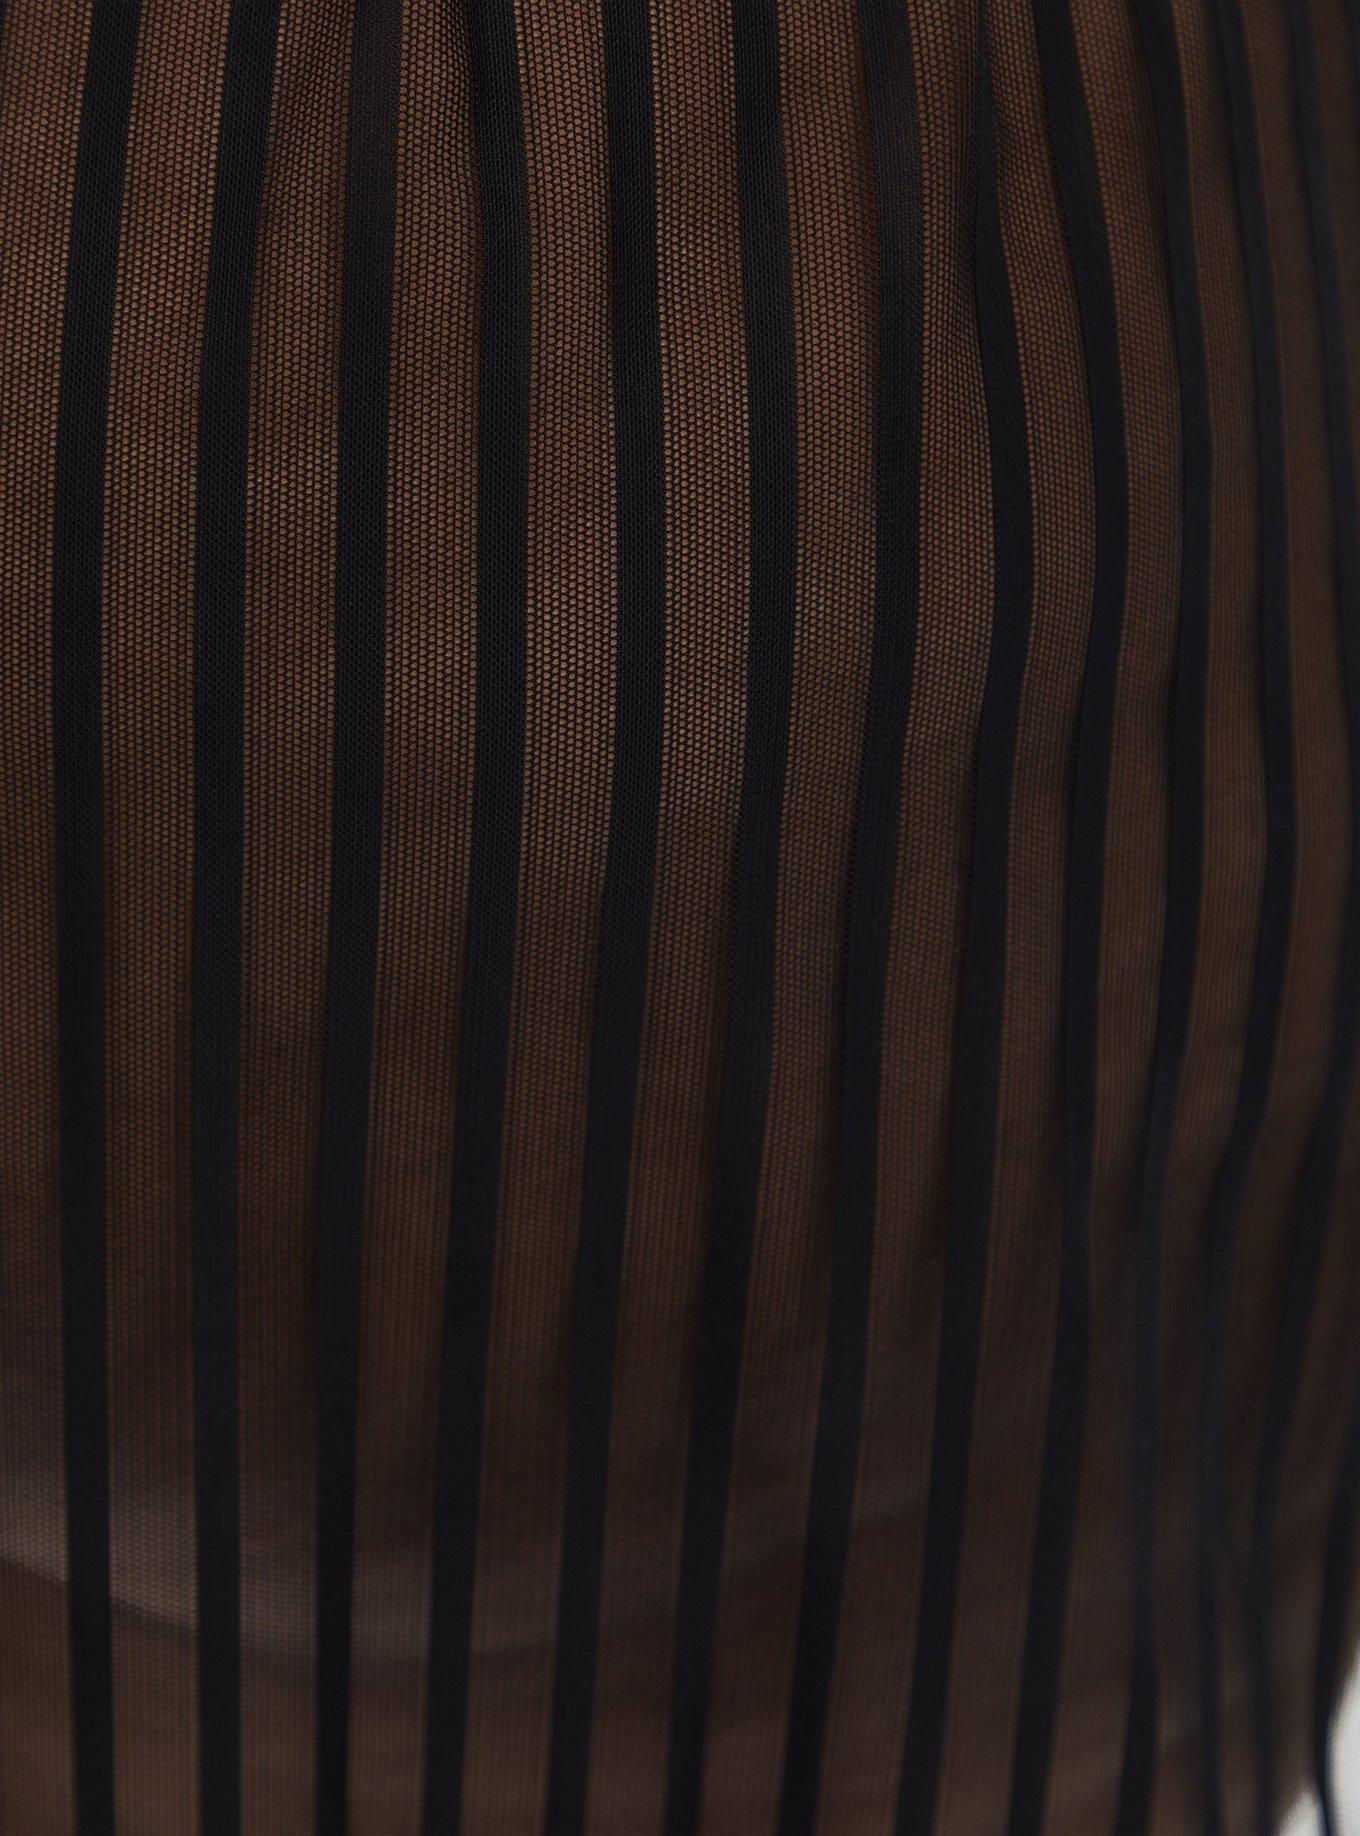 Plus Size - Black Striped Mesh Underwire Babydoll - Torrid